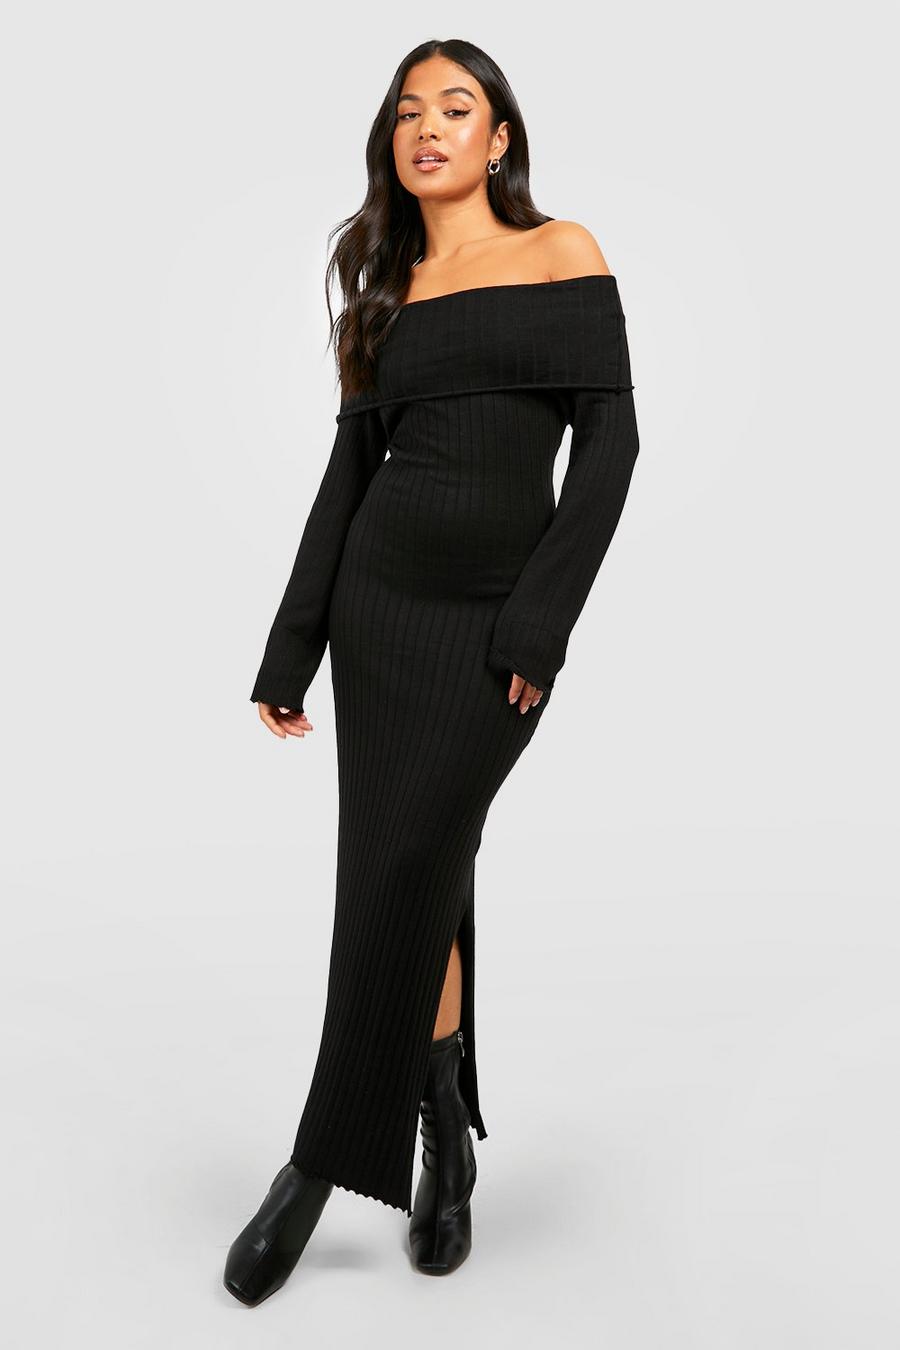 Black Petite Oversized Off The Shoulder Neckline Knitted Maxi Dress